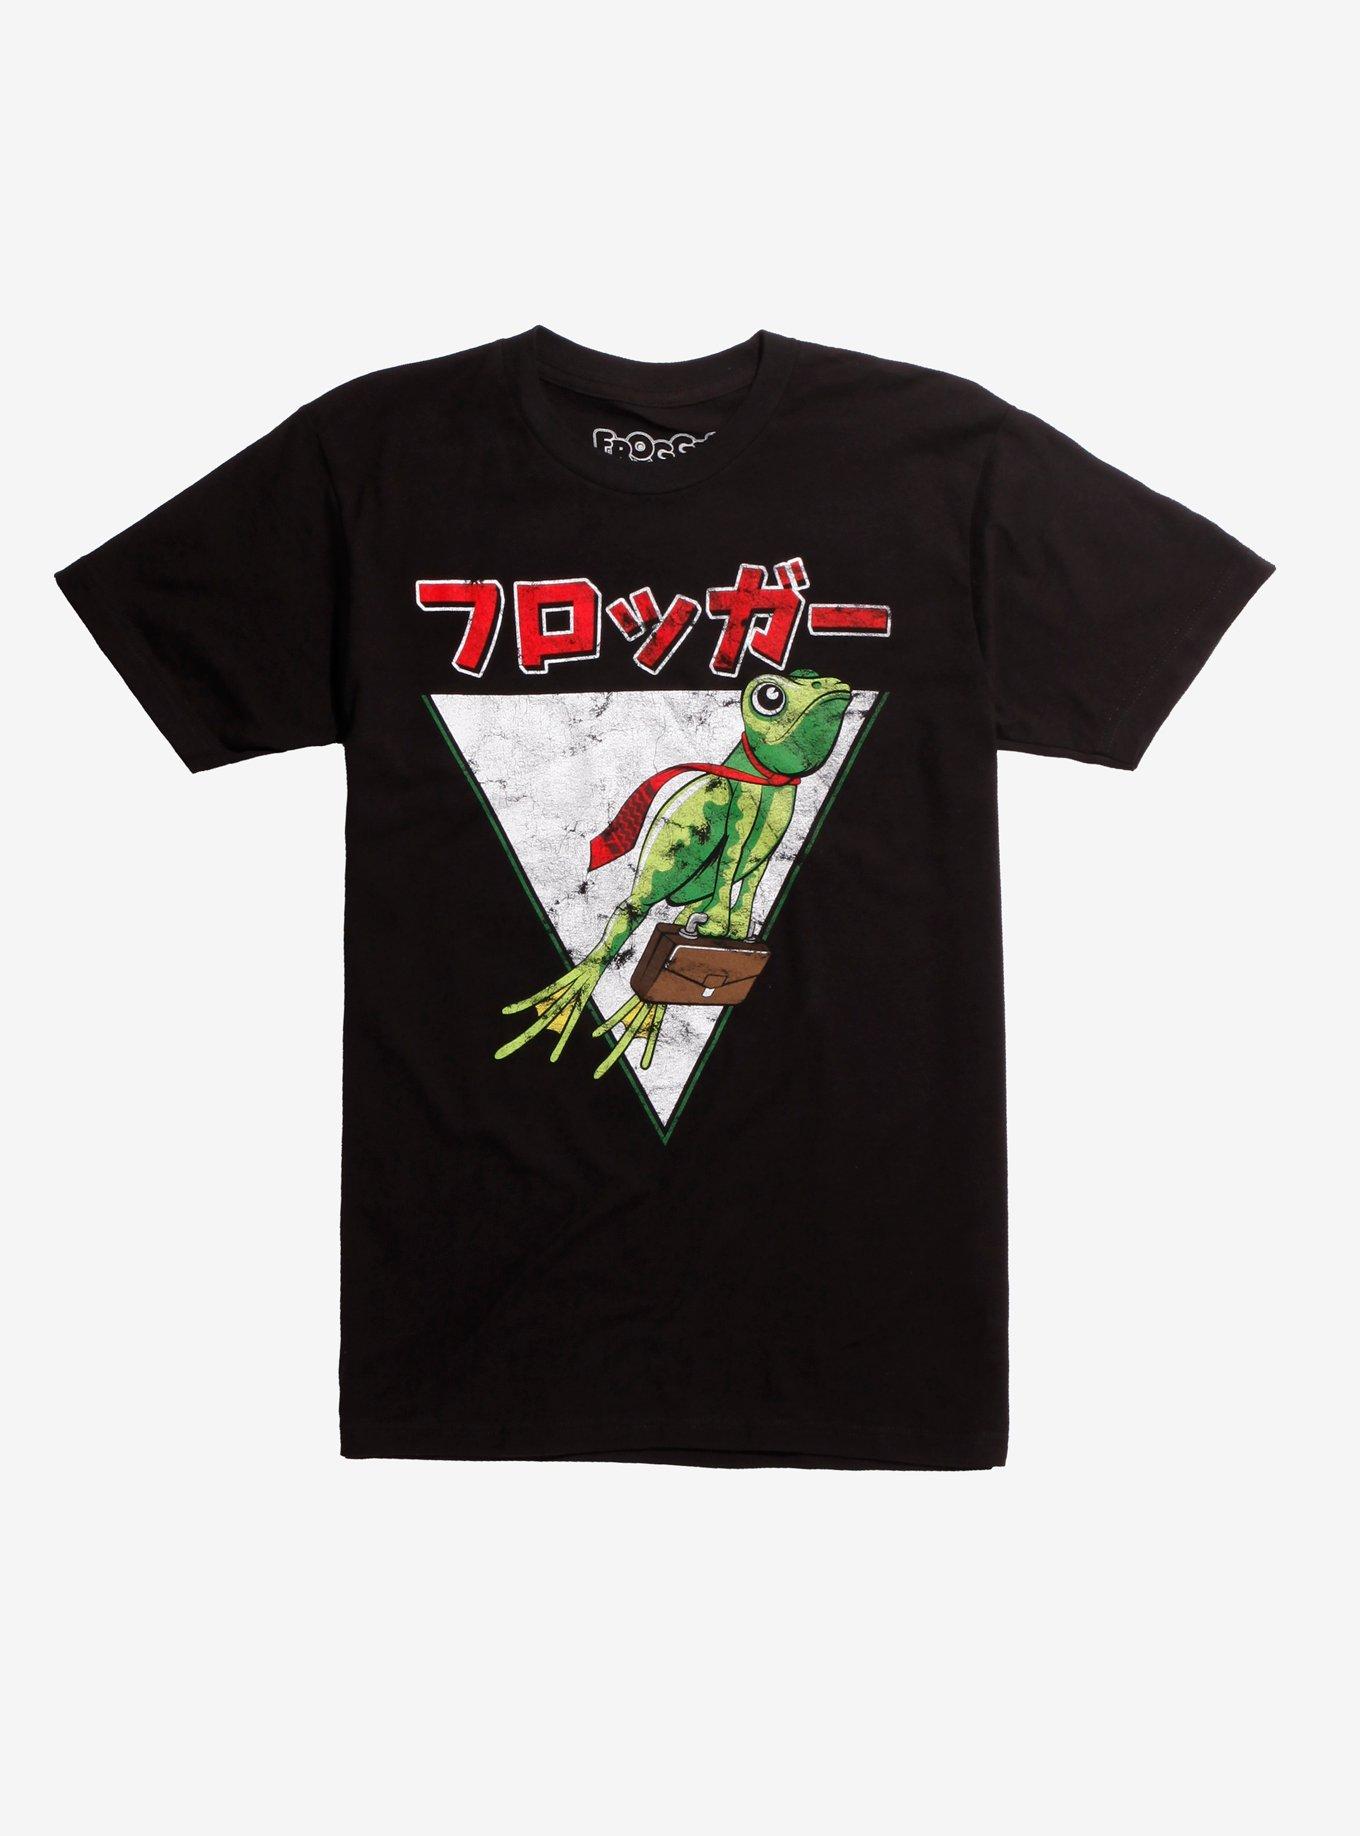 Frogger Retro Game T-Shirt | Hot Topic